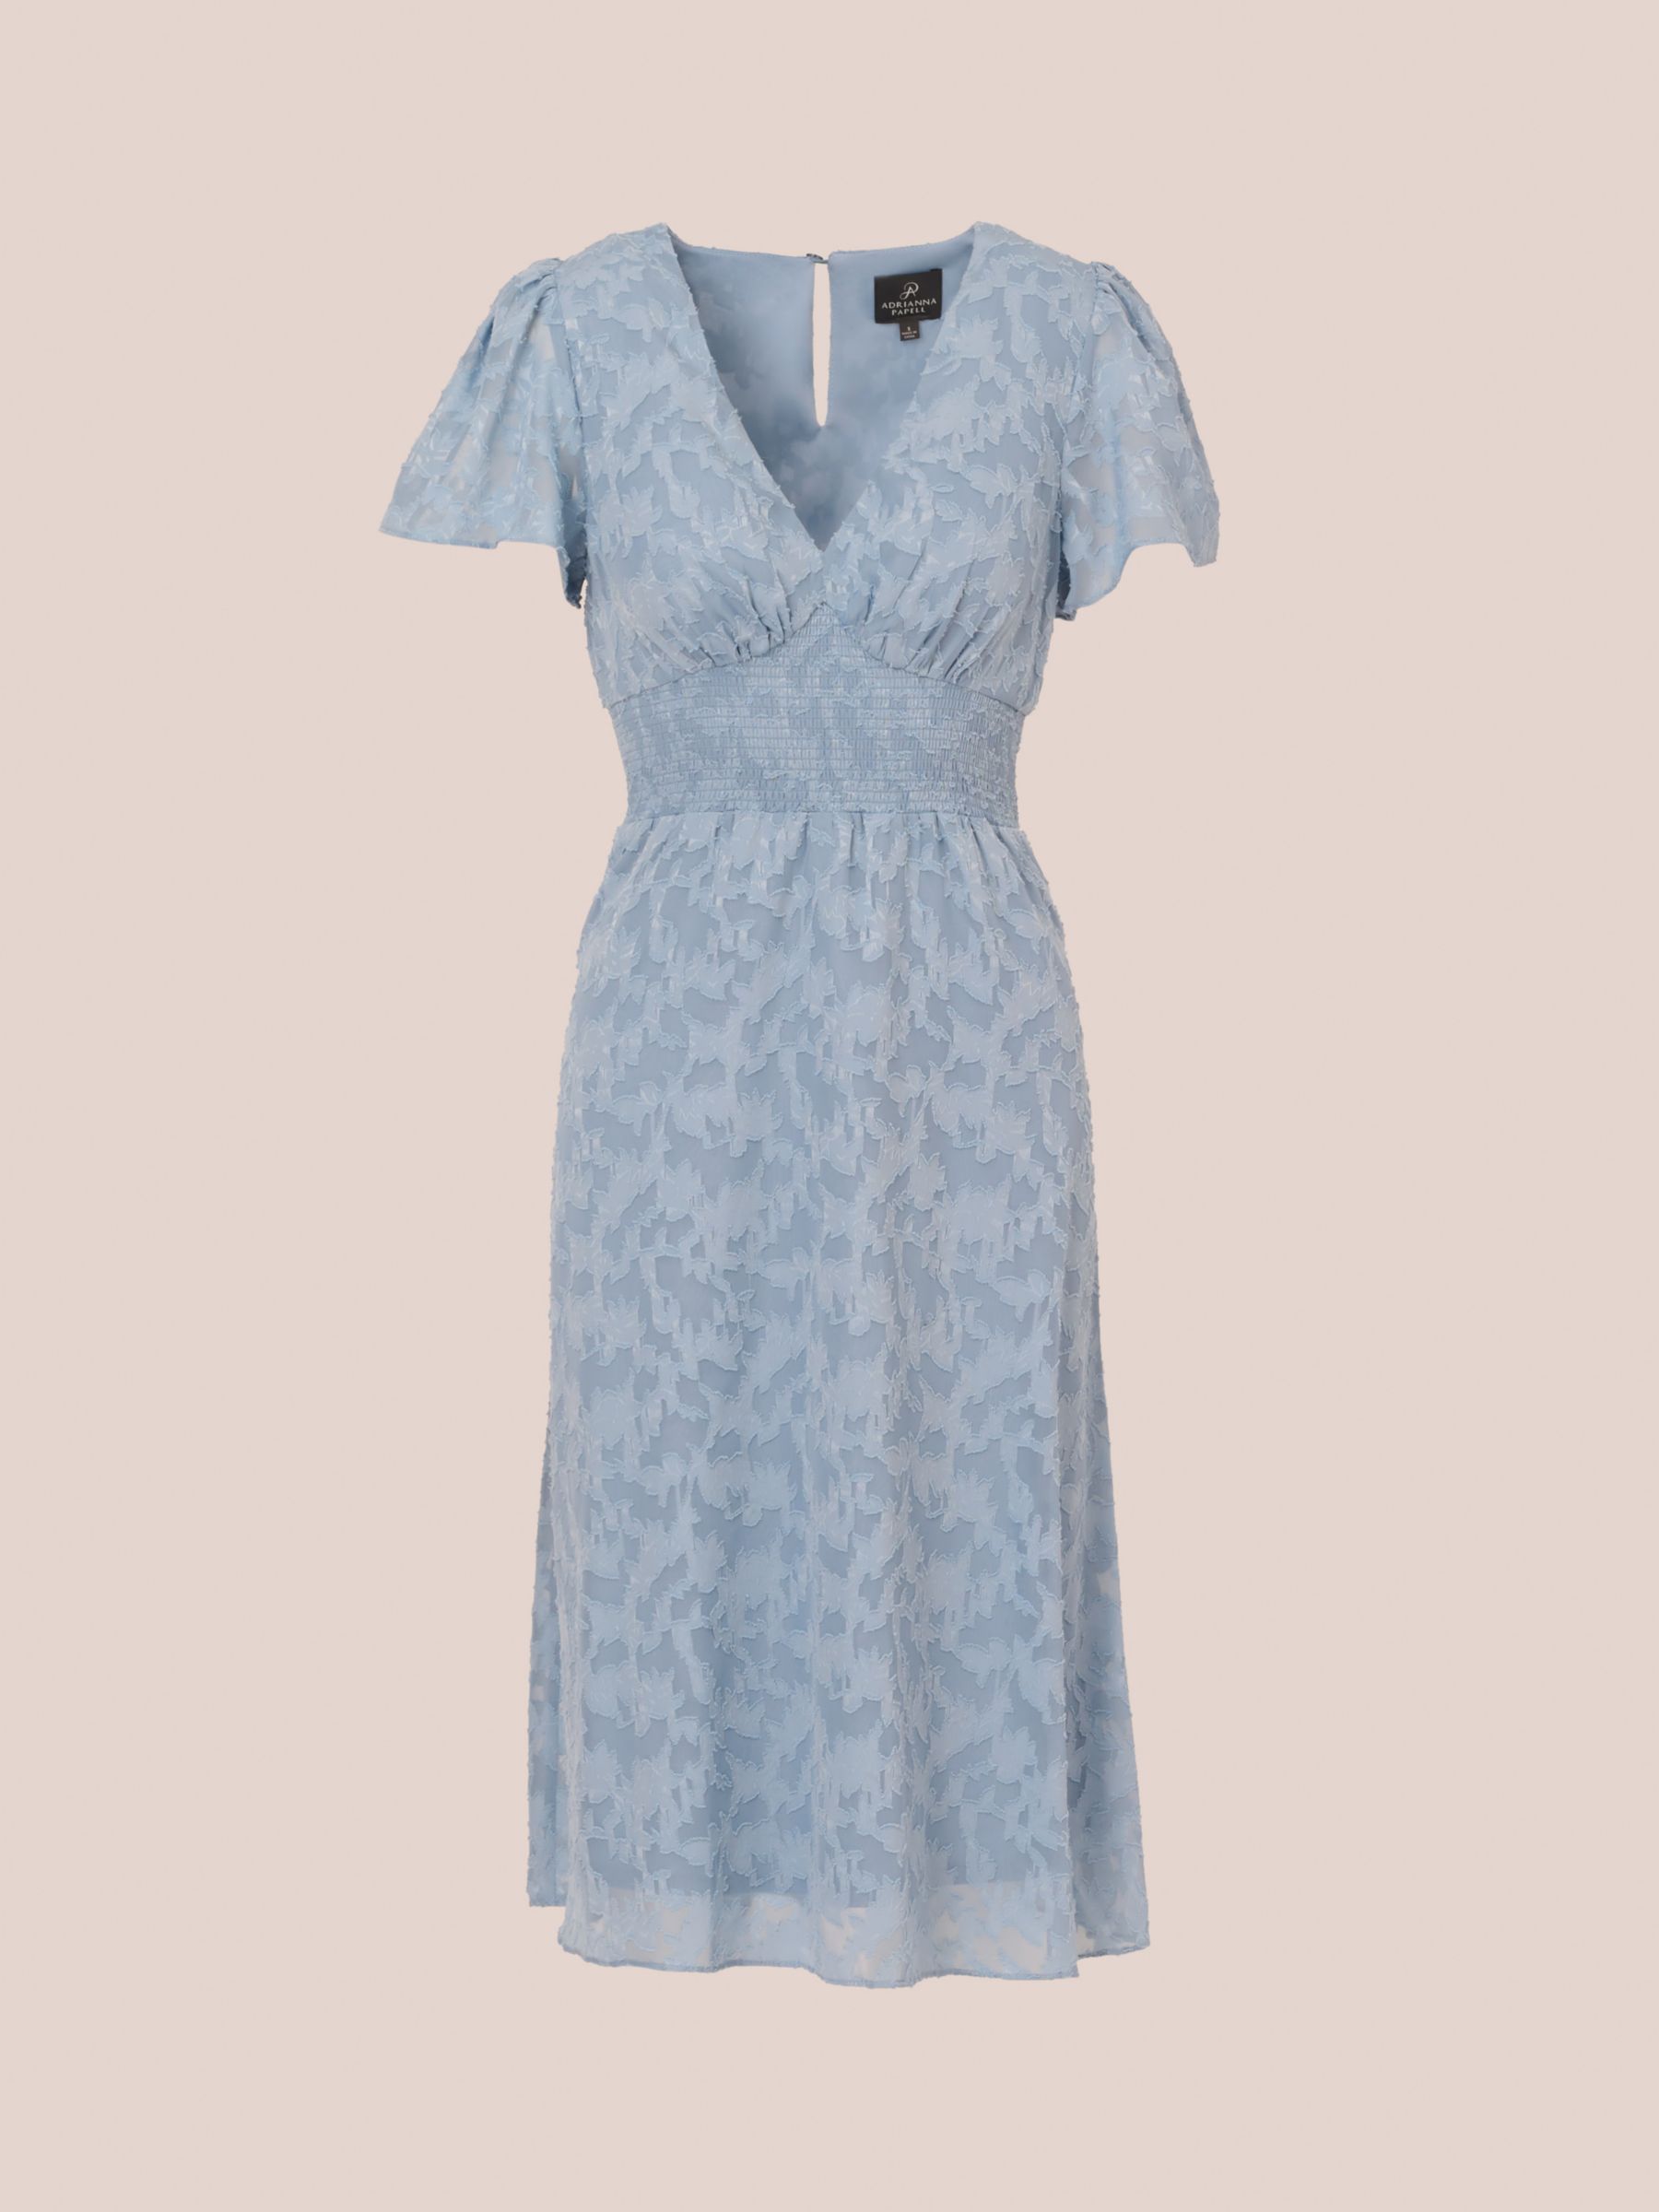 Adrianna Papell Burnout Midi Dress, Dusty Blue, S